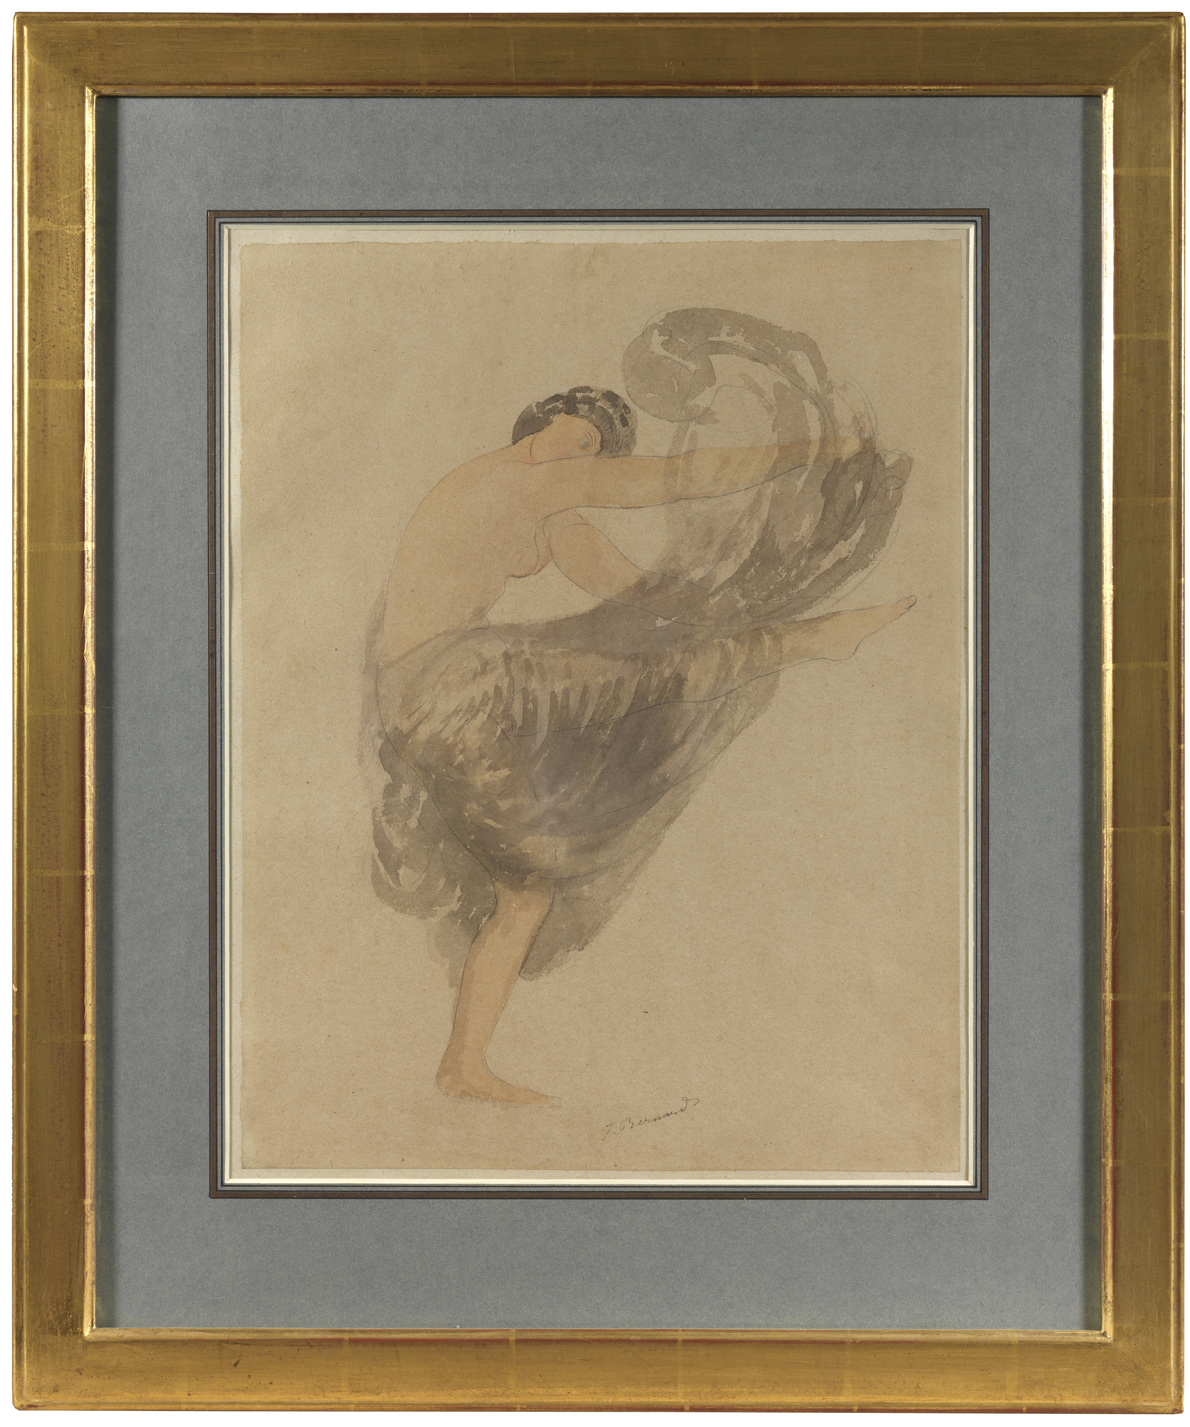 The Dancer, Watercolour, c. 1910